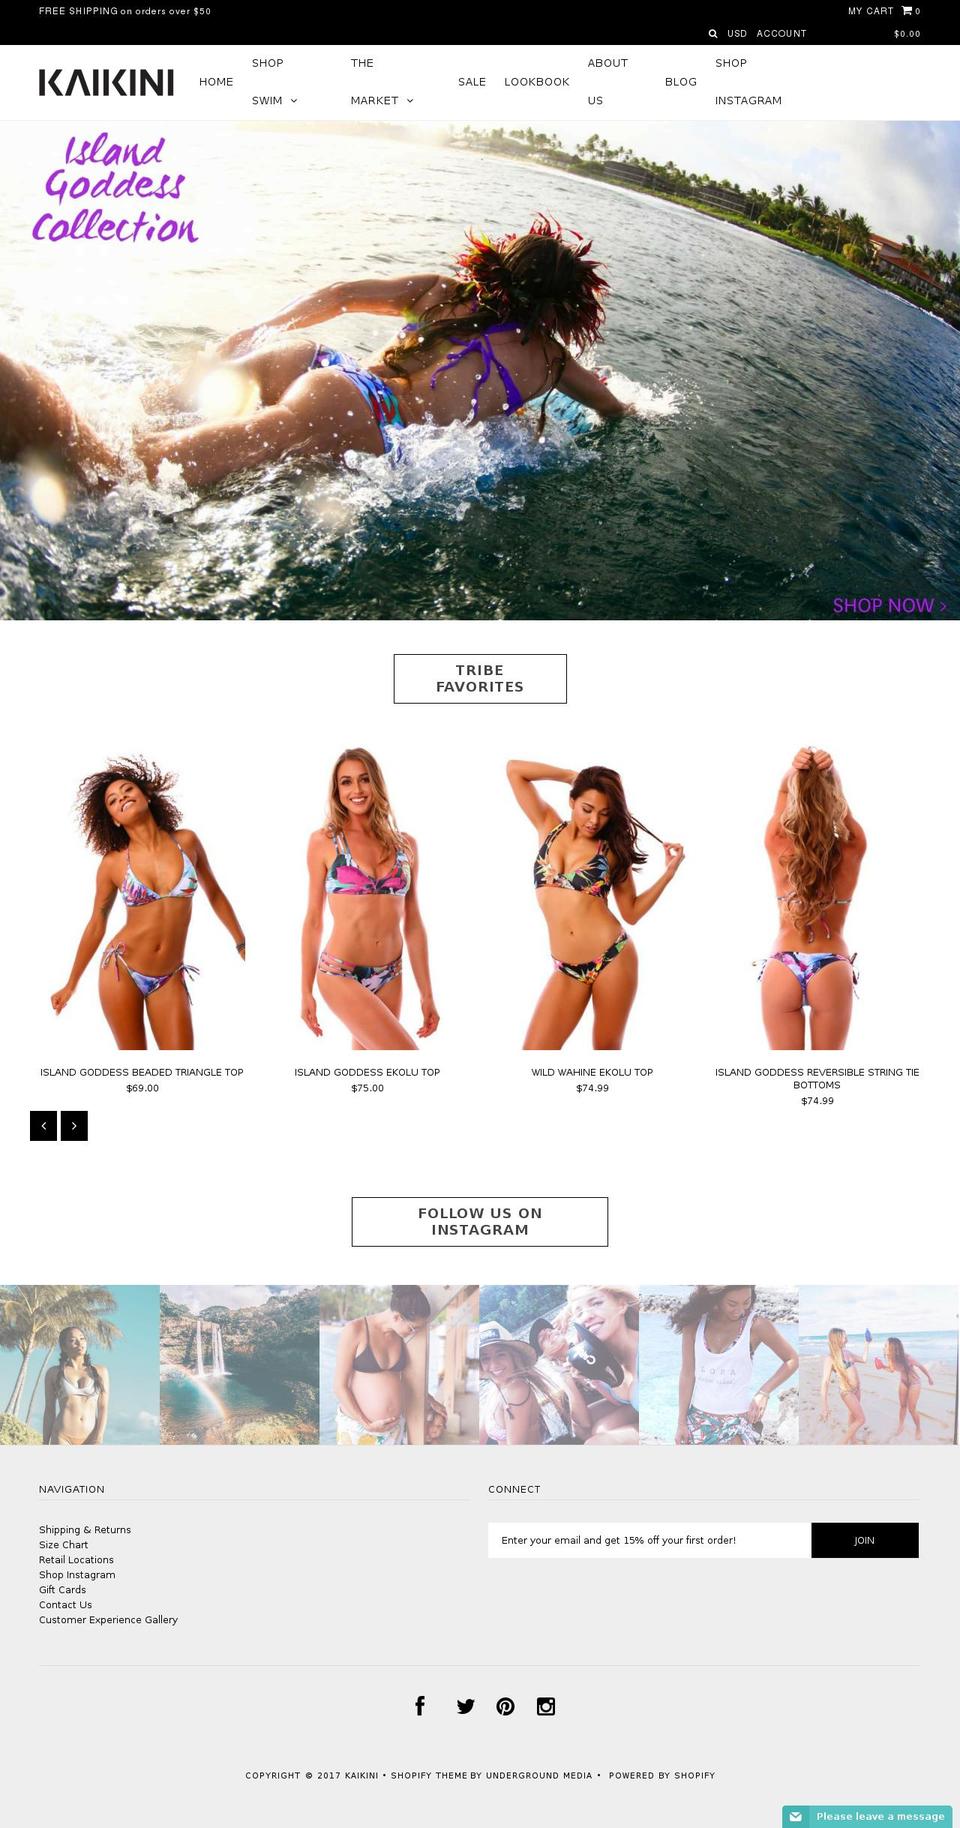 kaikini.com shopify website screenshot